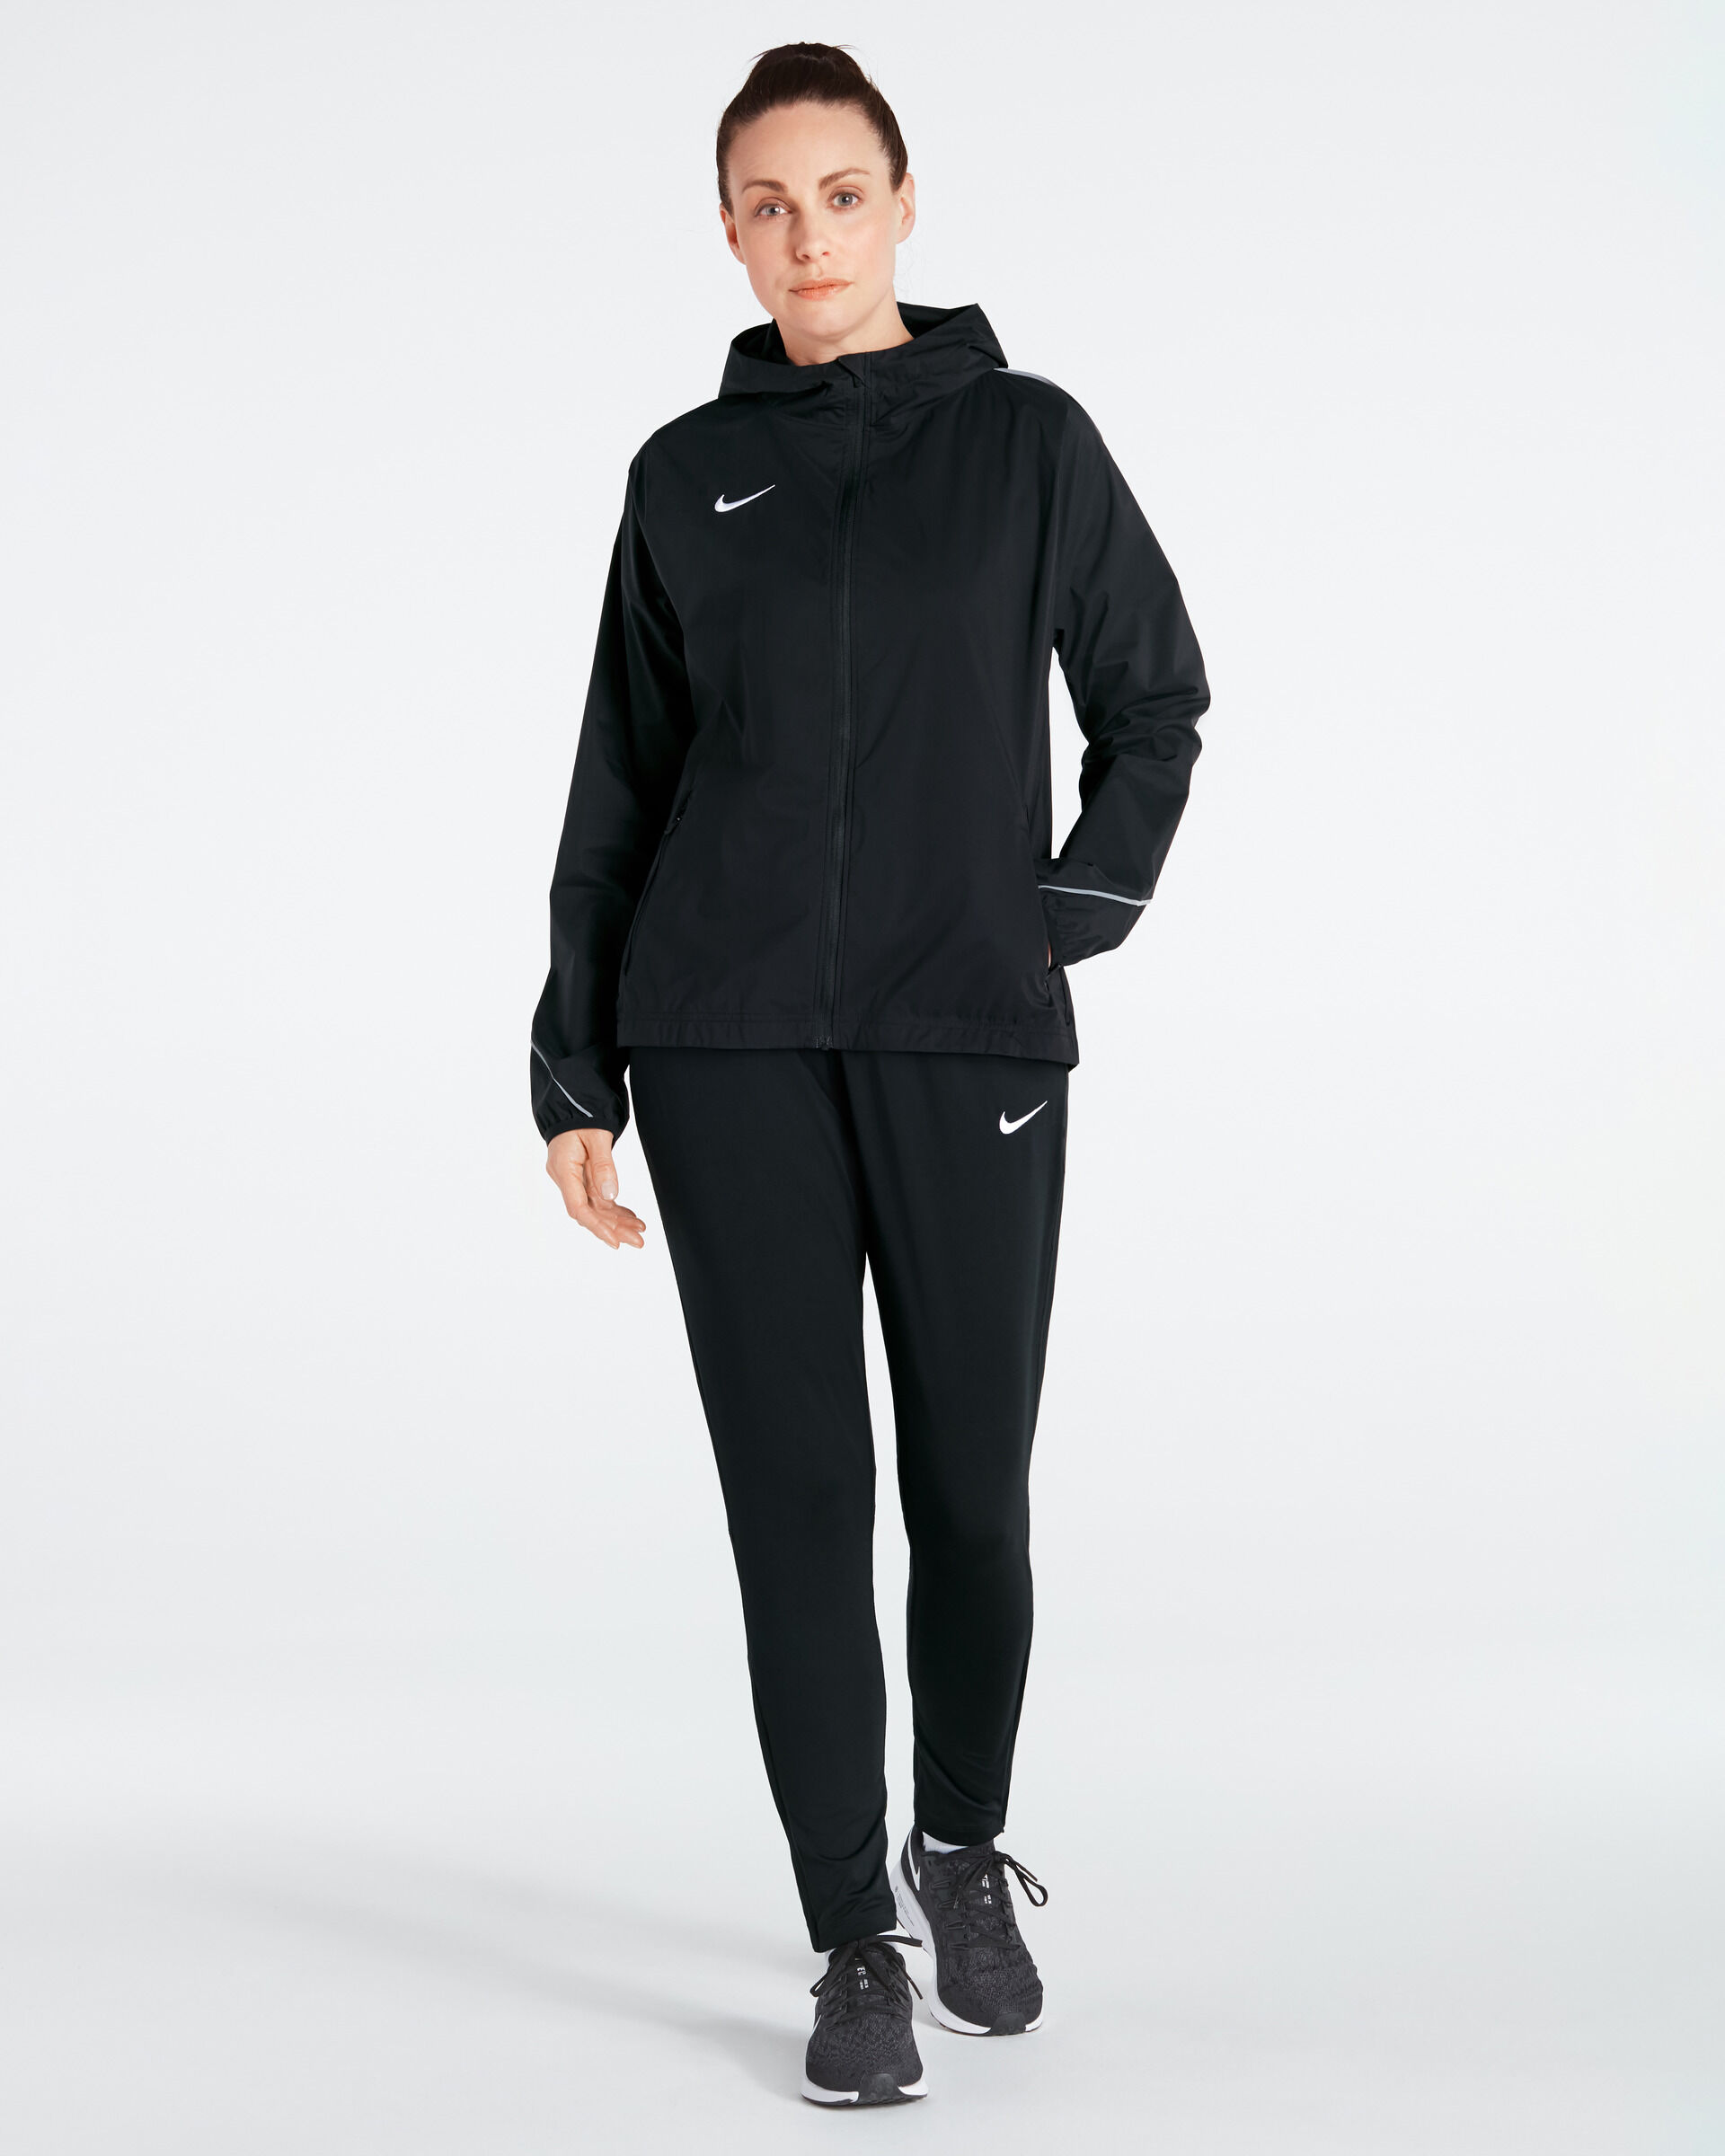 Pantalón de chándal Nike Dry Element Negro para Mujeres - NT0318-010